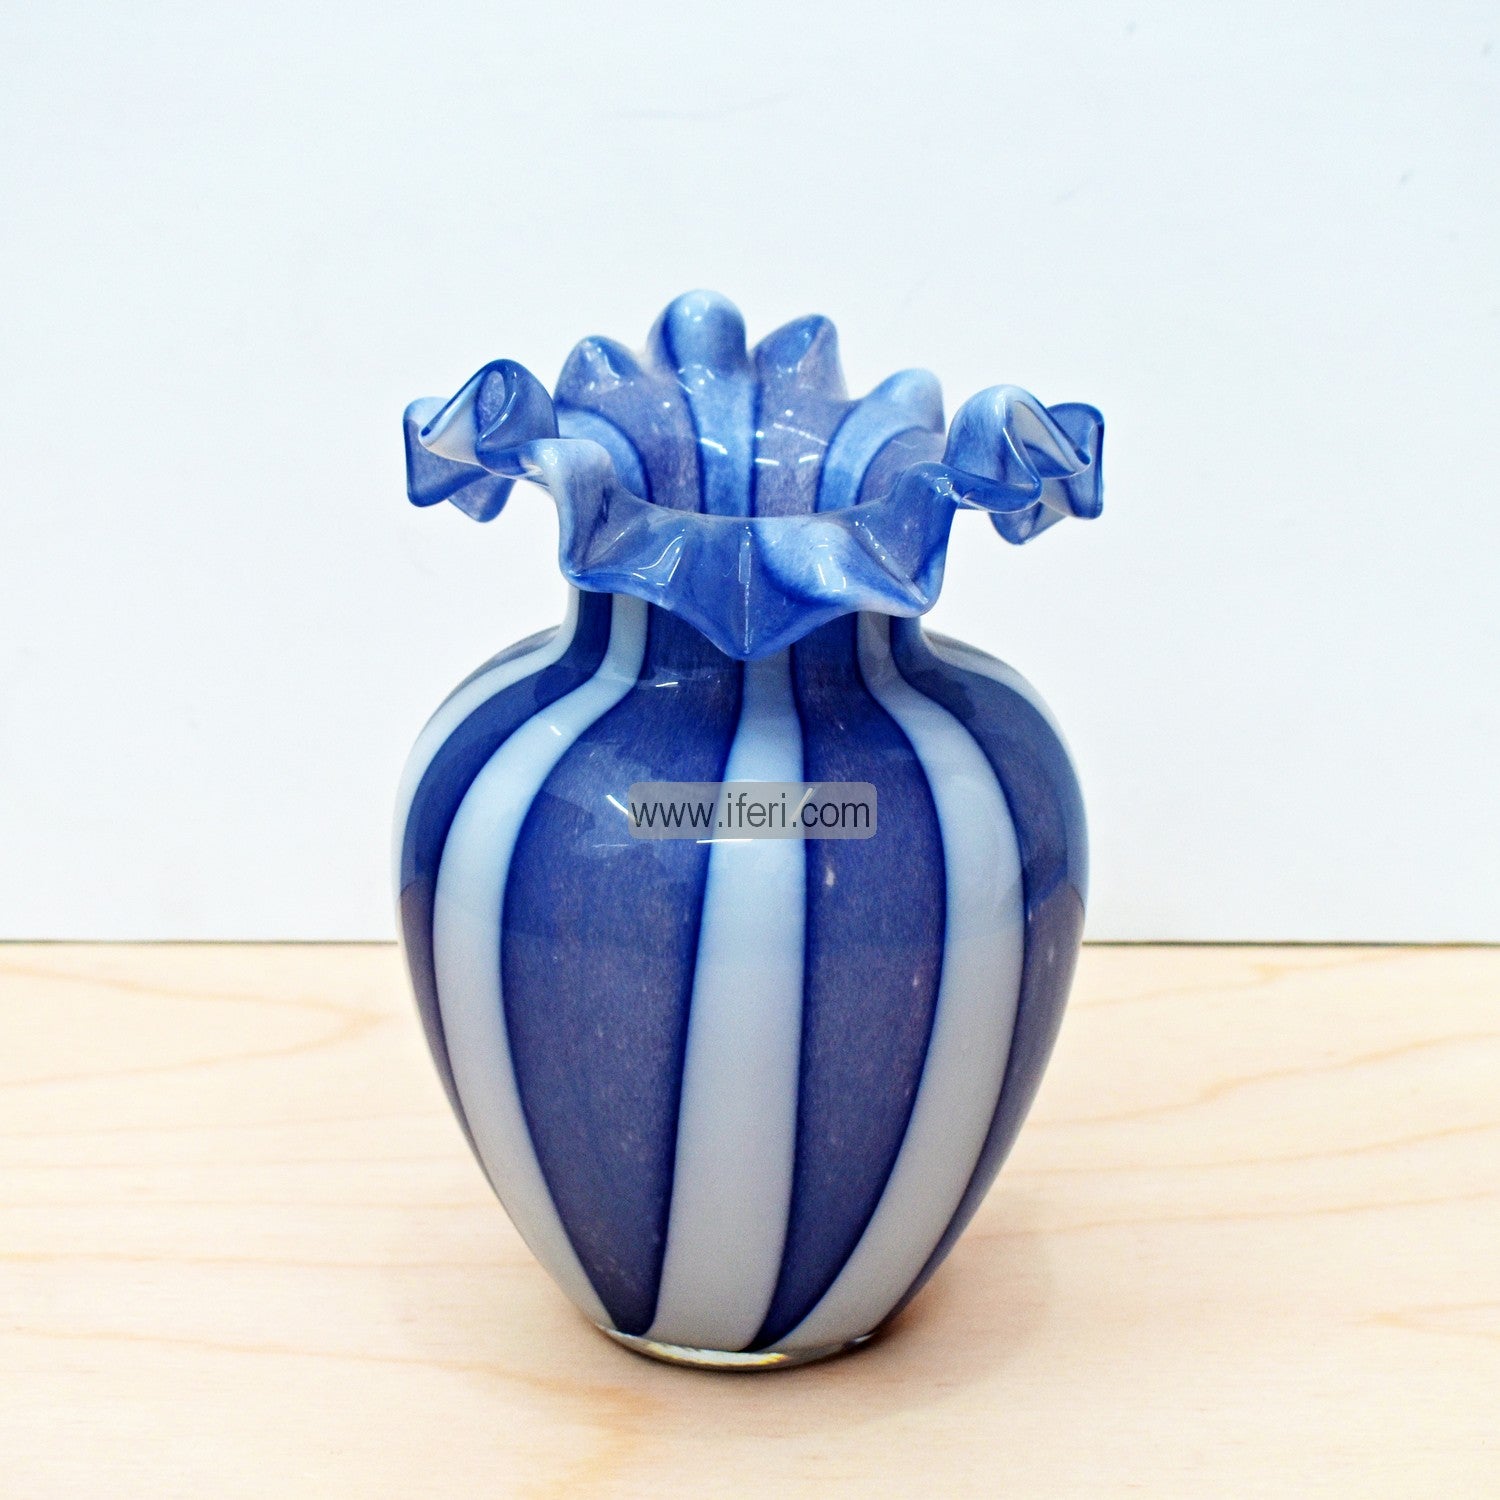 8 Inch Glass Decorative Flower Vase FT1360